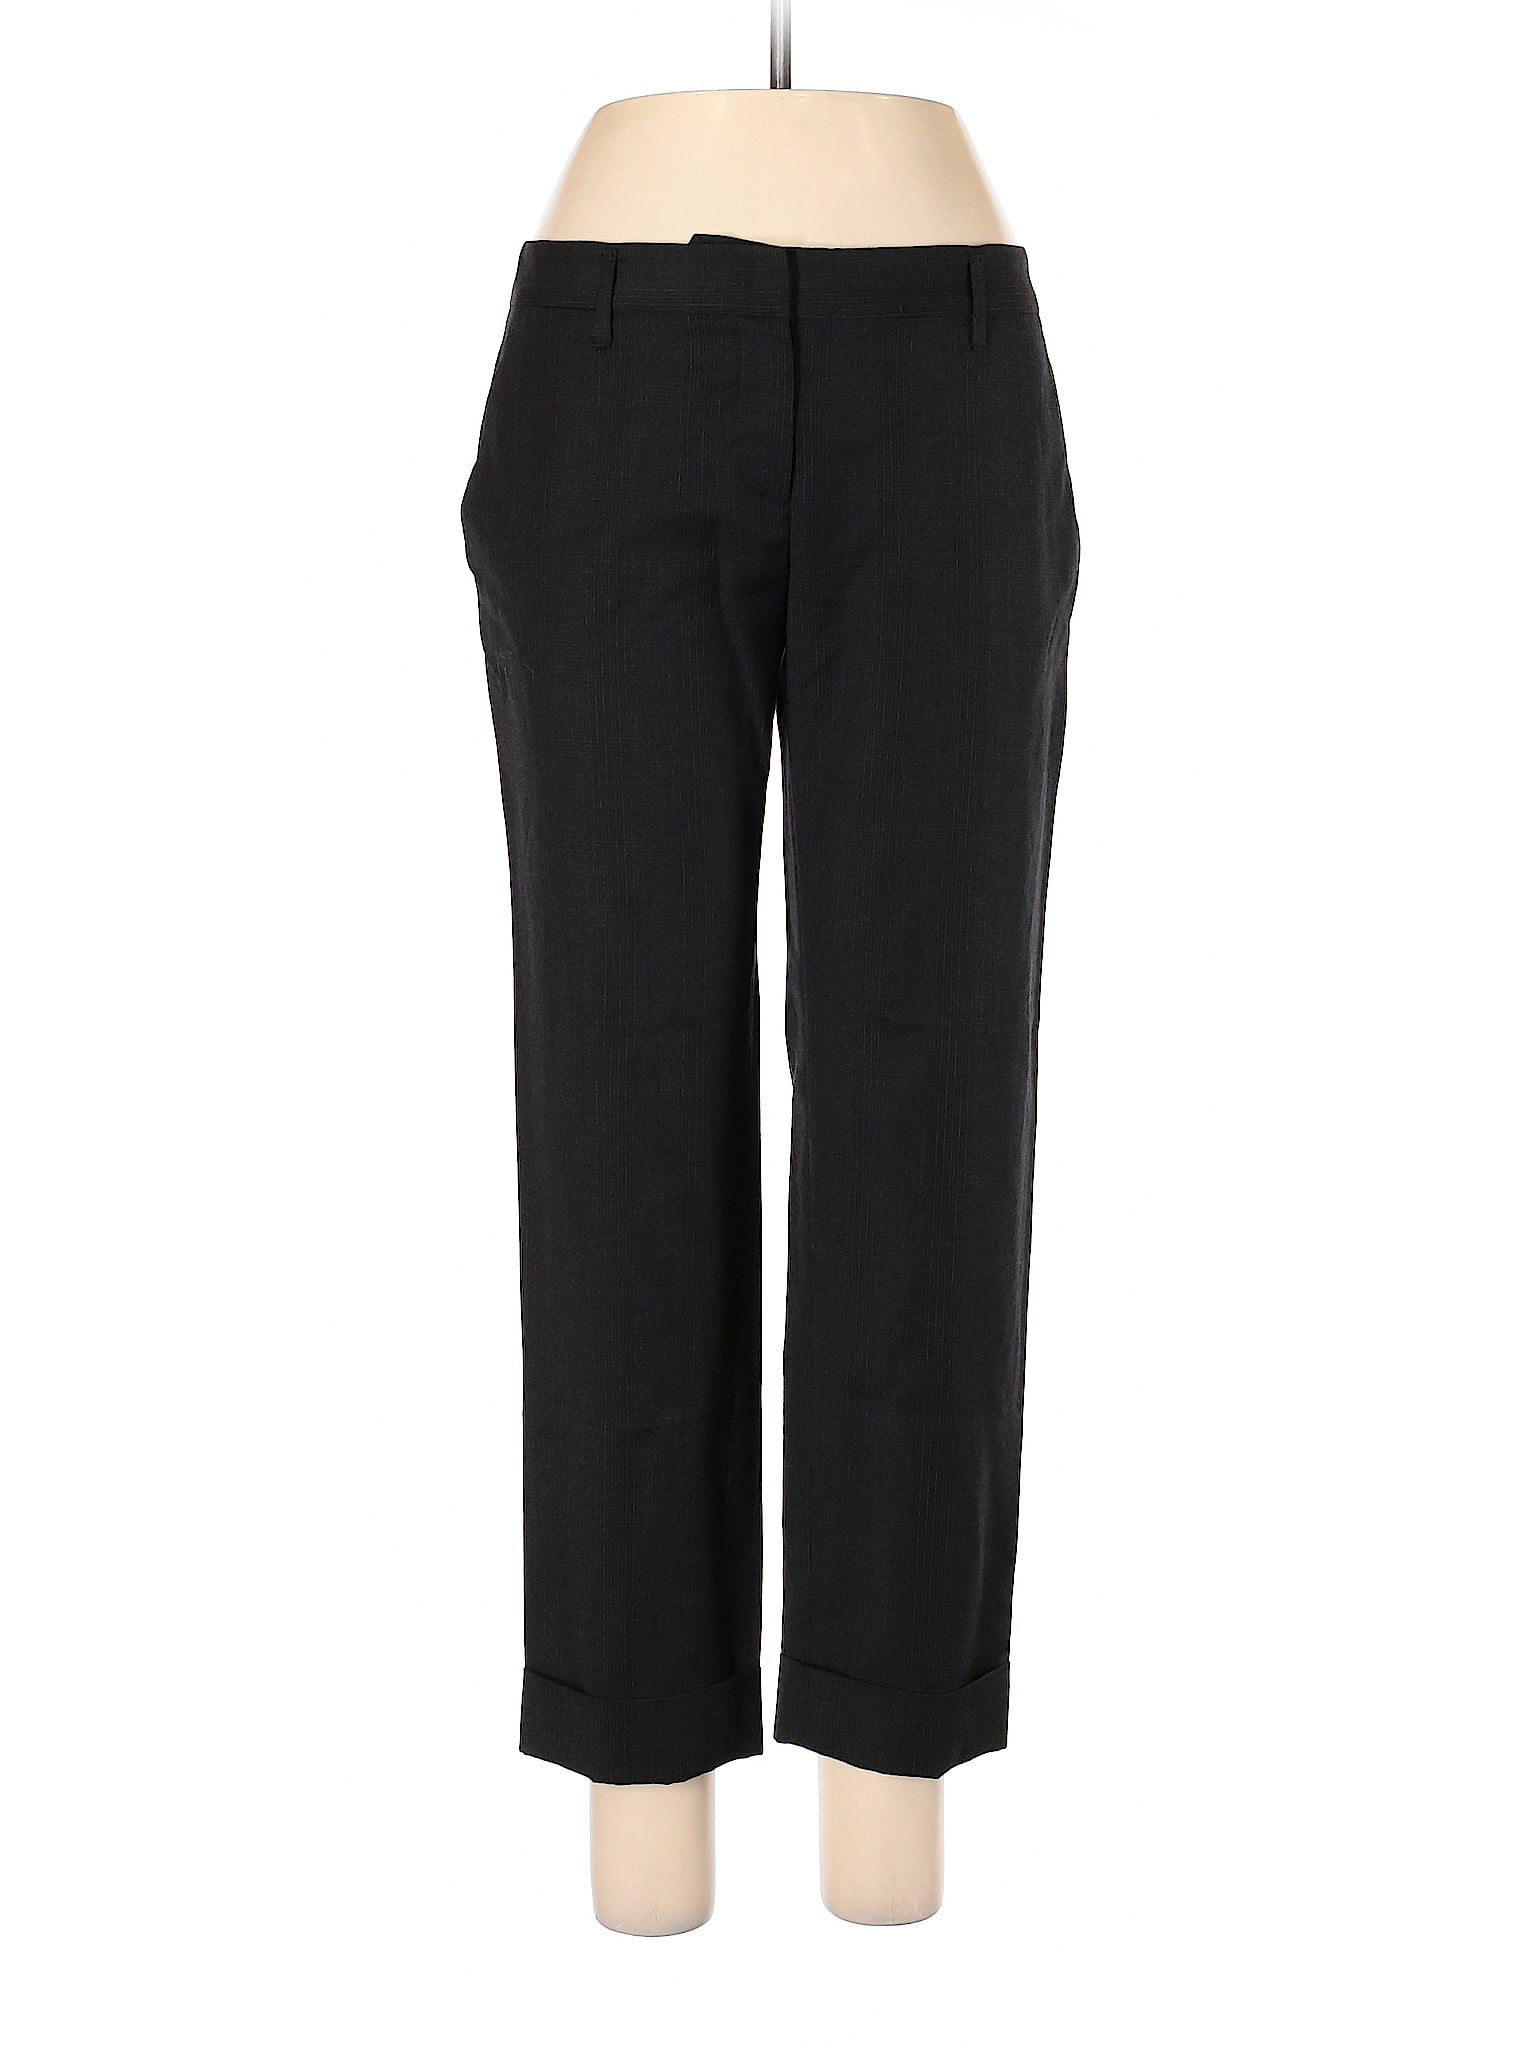 Prada - Pre-Owned Prada Women's Size 44 Wool Pants - Walmart.com ...